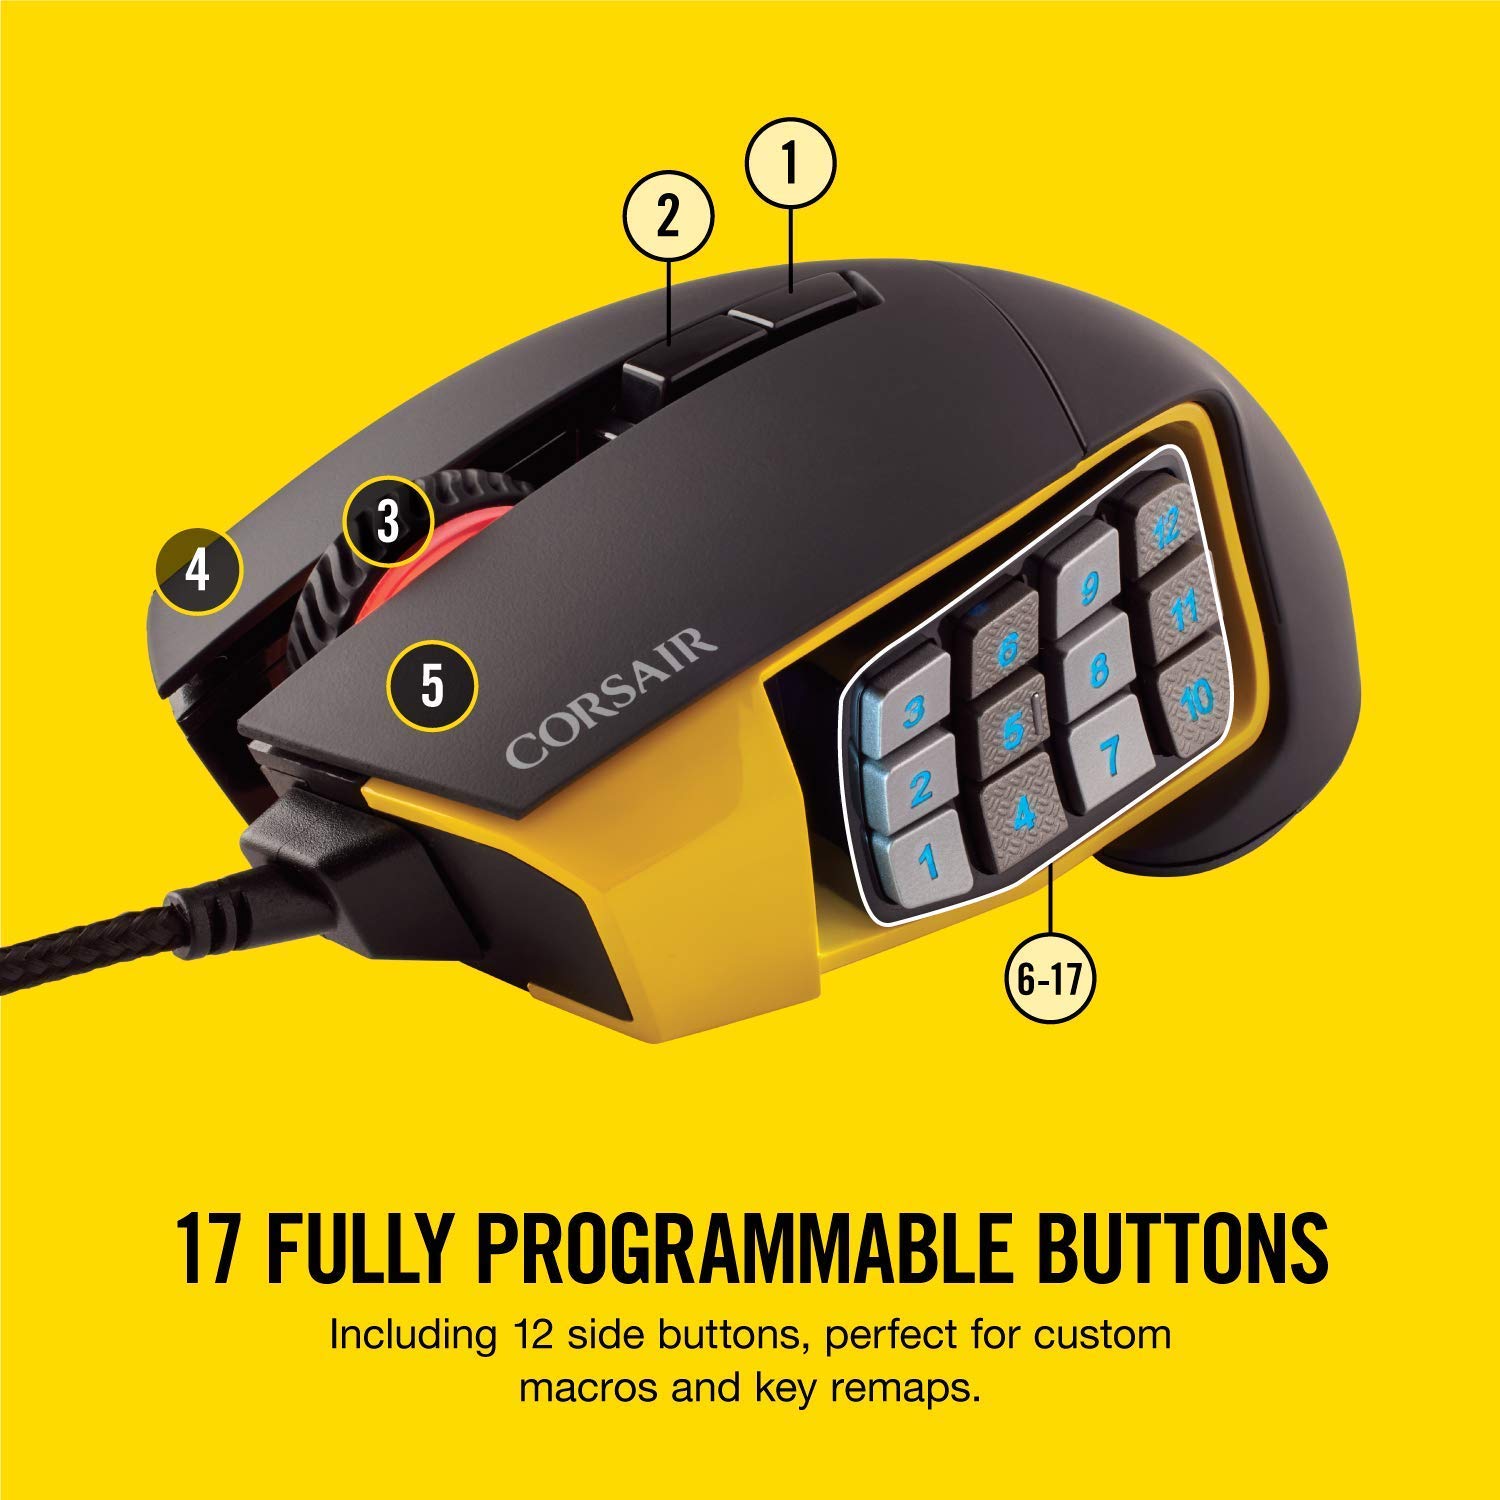 Corsair Scimitar PRO RGB Optical MOBA/MMO Gaming Mouse ของแท้ ประกันศูนย์ 2ปี (Yellow)